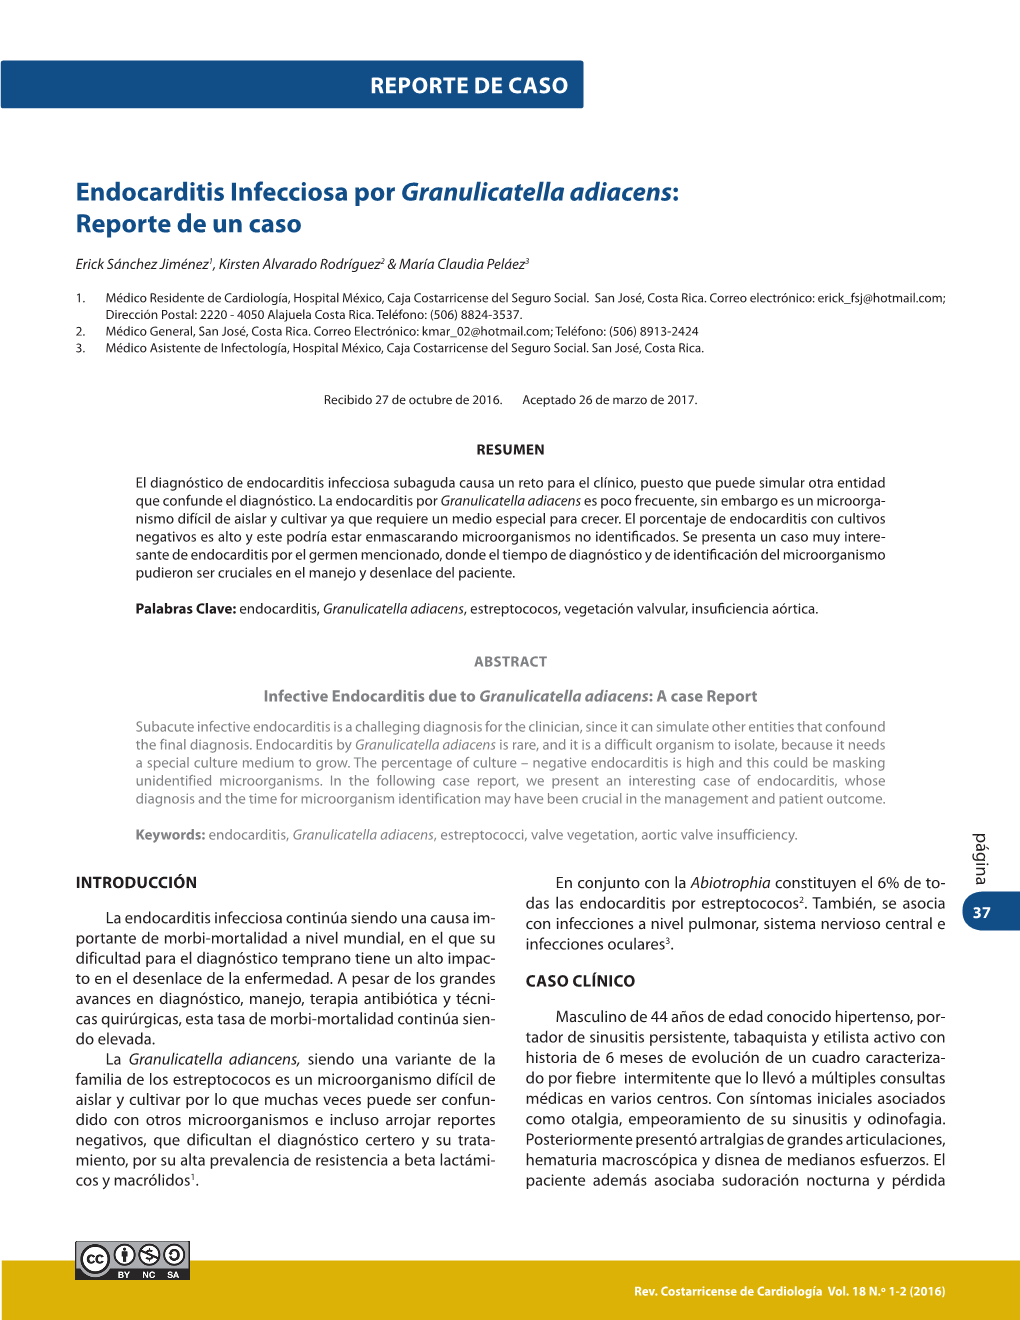 Endocarditis Infecciosa Por Granulicatella Adiacens: Reporte De Un Caso